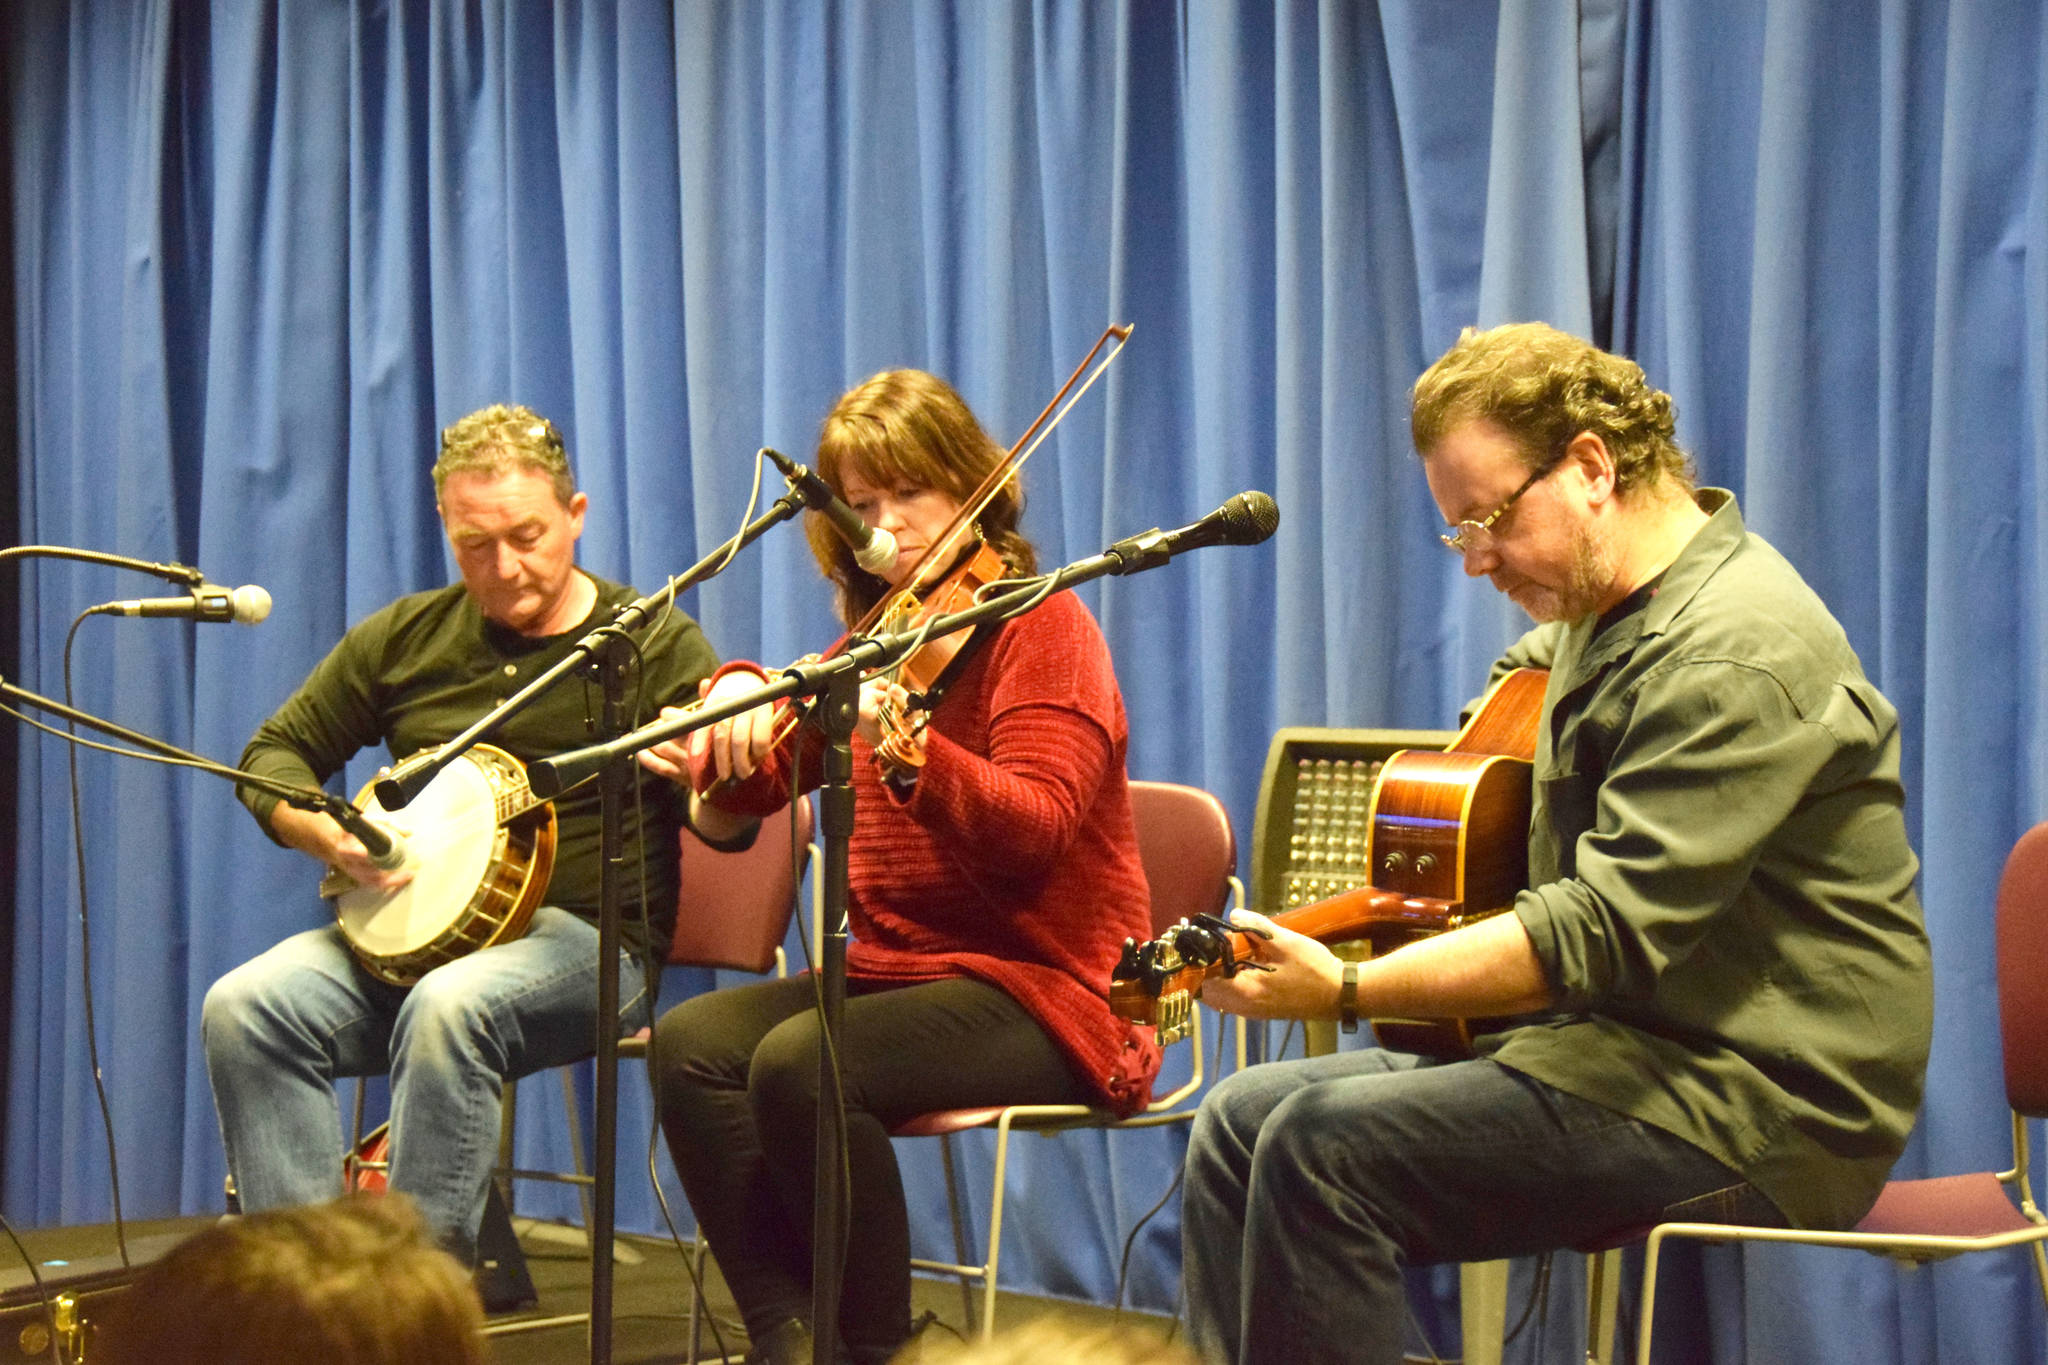 From left, musicians John Walsh, Rose Flanagan and Pat Broaders perform at the annual Winter Concert of Traditional Irish Music at Kenai Peninsula College in Kenai, Alaska on Feb. 1, 2019. (Photo by Brian Mazurek/Peninsula Clarion)